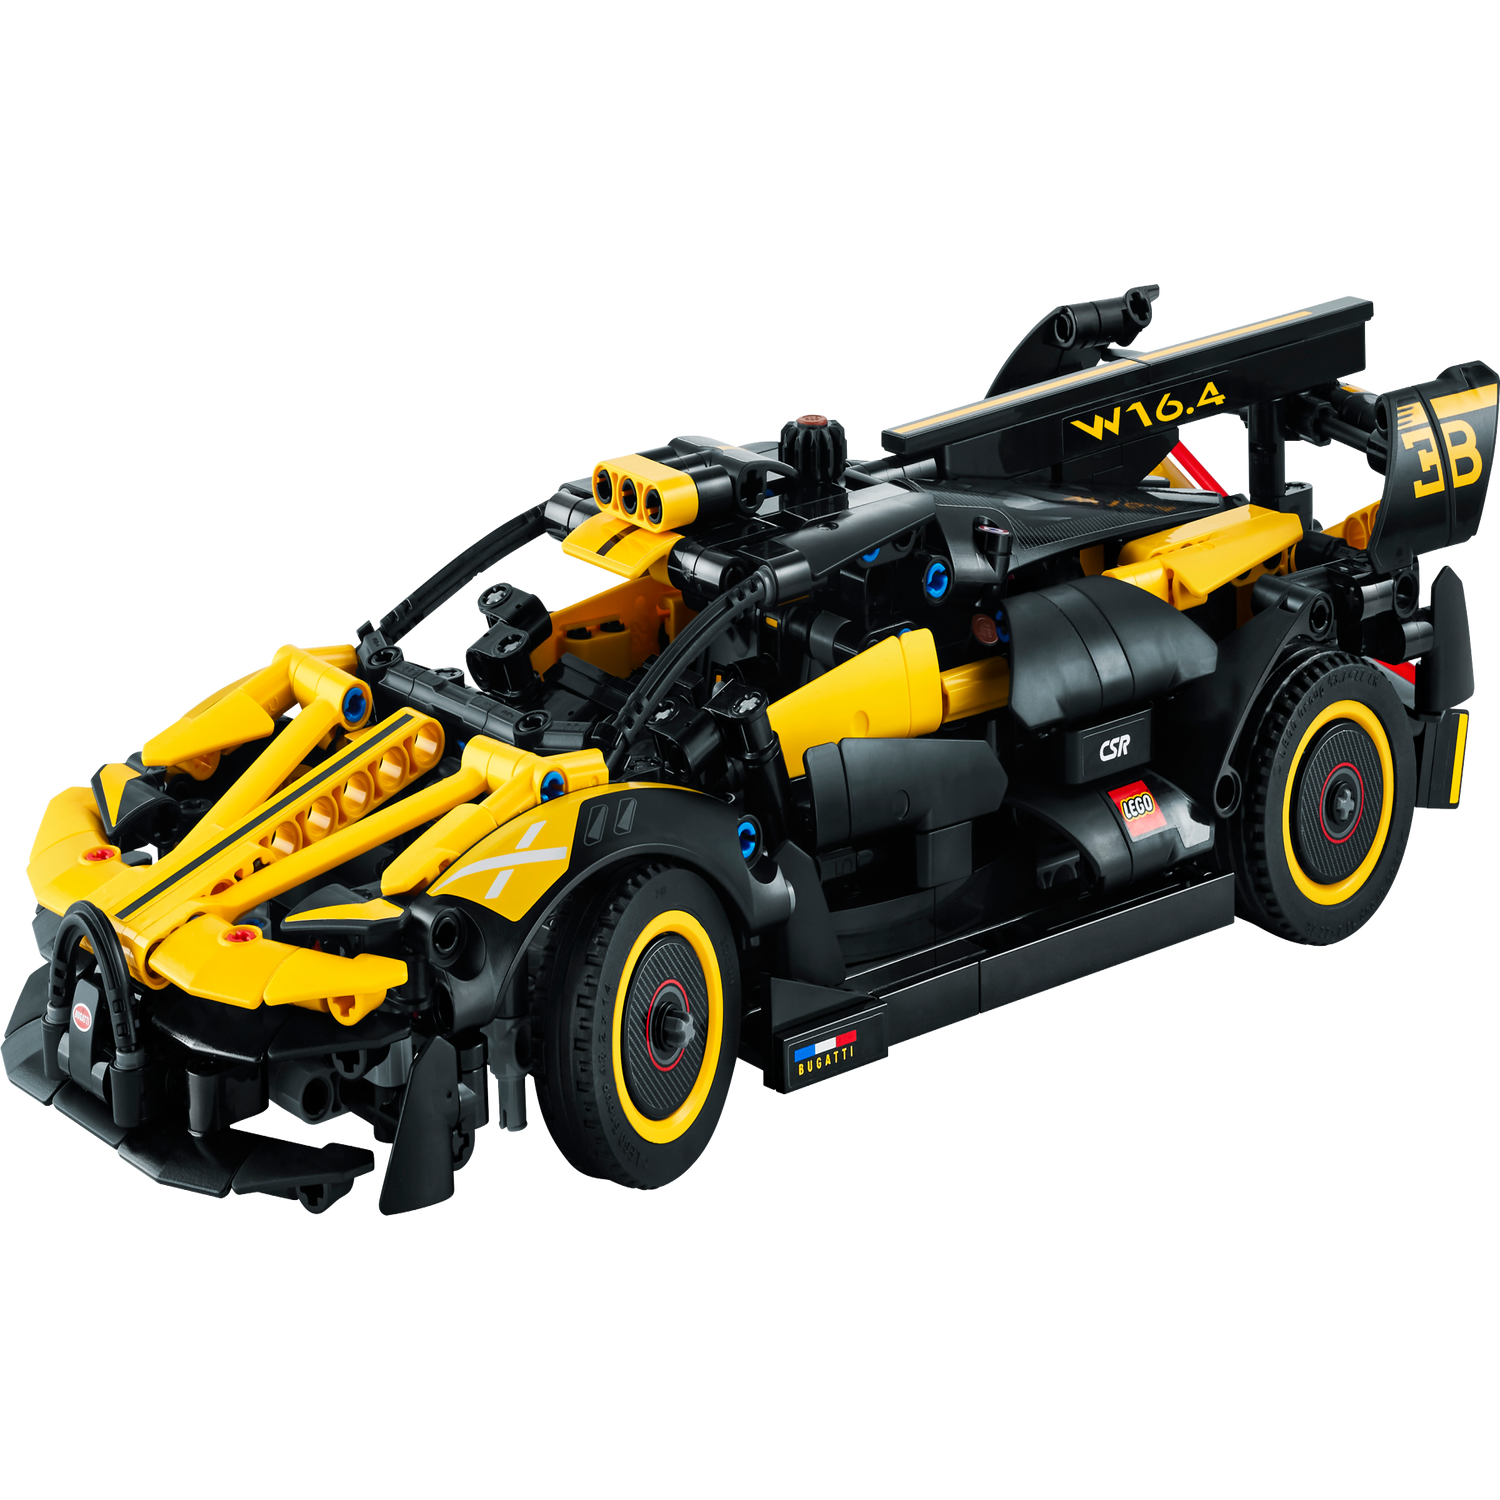 Nouveauté LEGO Technic 2023 : 42151 Bugatti Bolide - HelloBricks